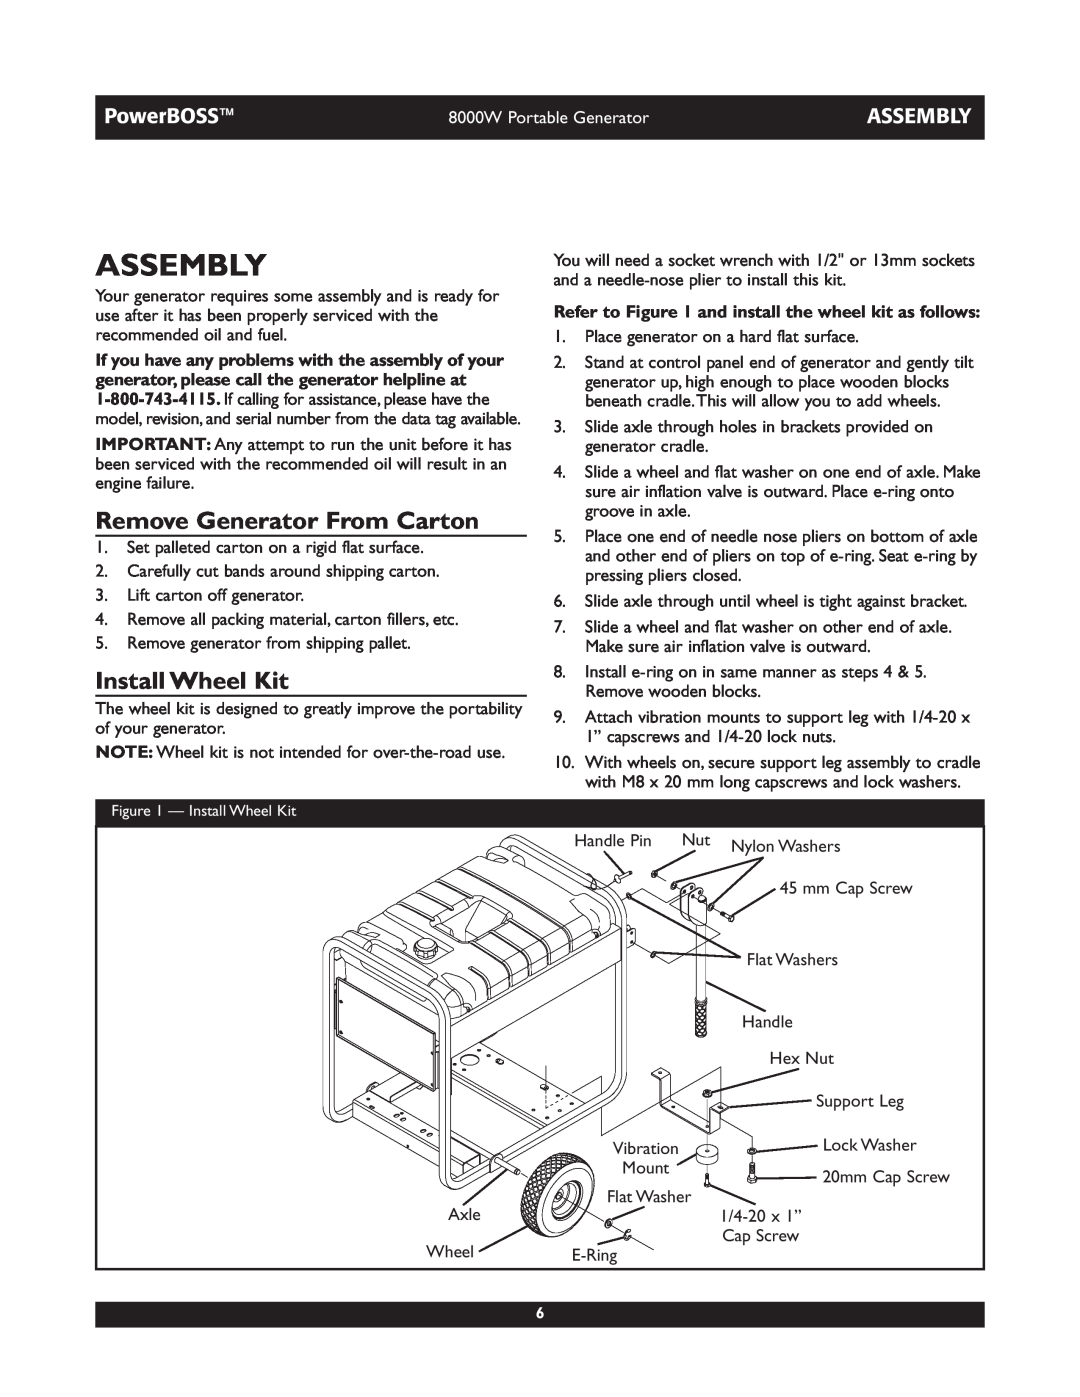 Briggs & Stratton 30228 Assembly, Remove Generator From Carton, Install Wheel Kit, PowerBOSS, 8000W Portable Generator 